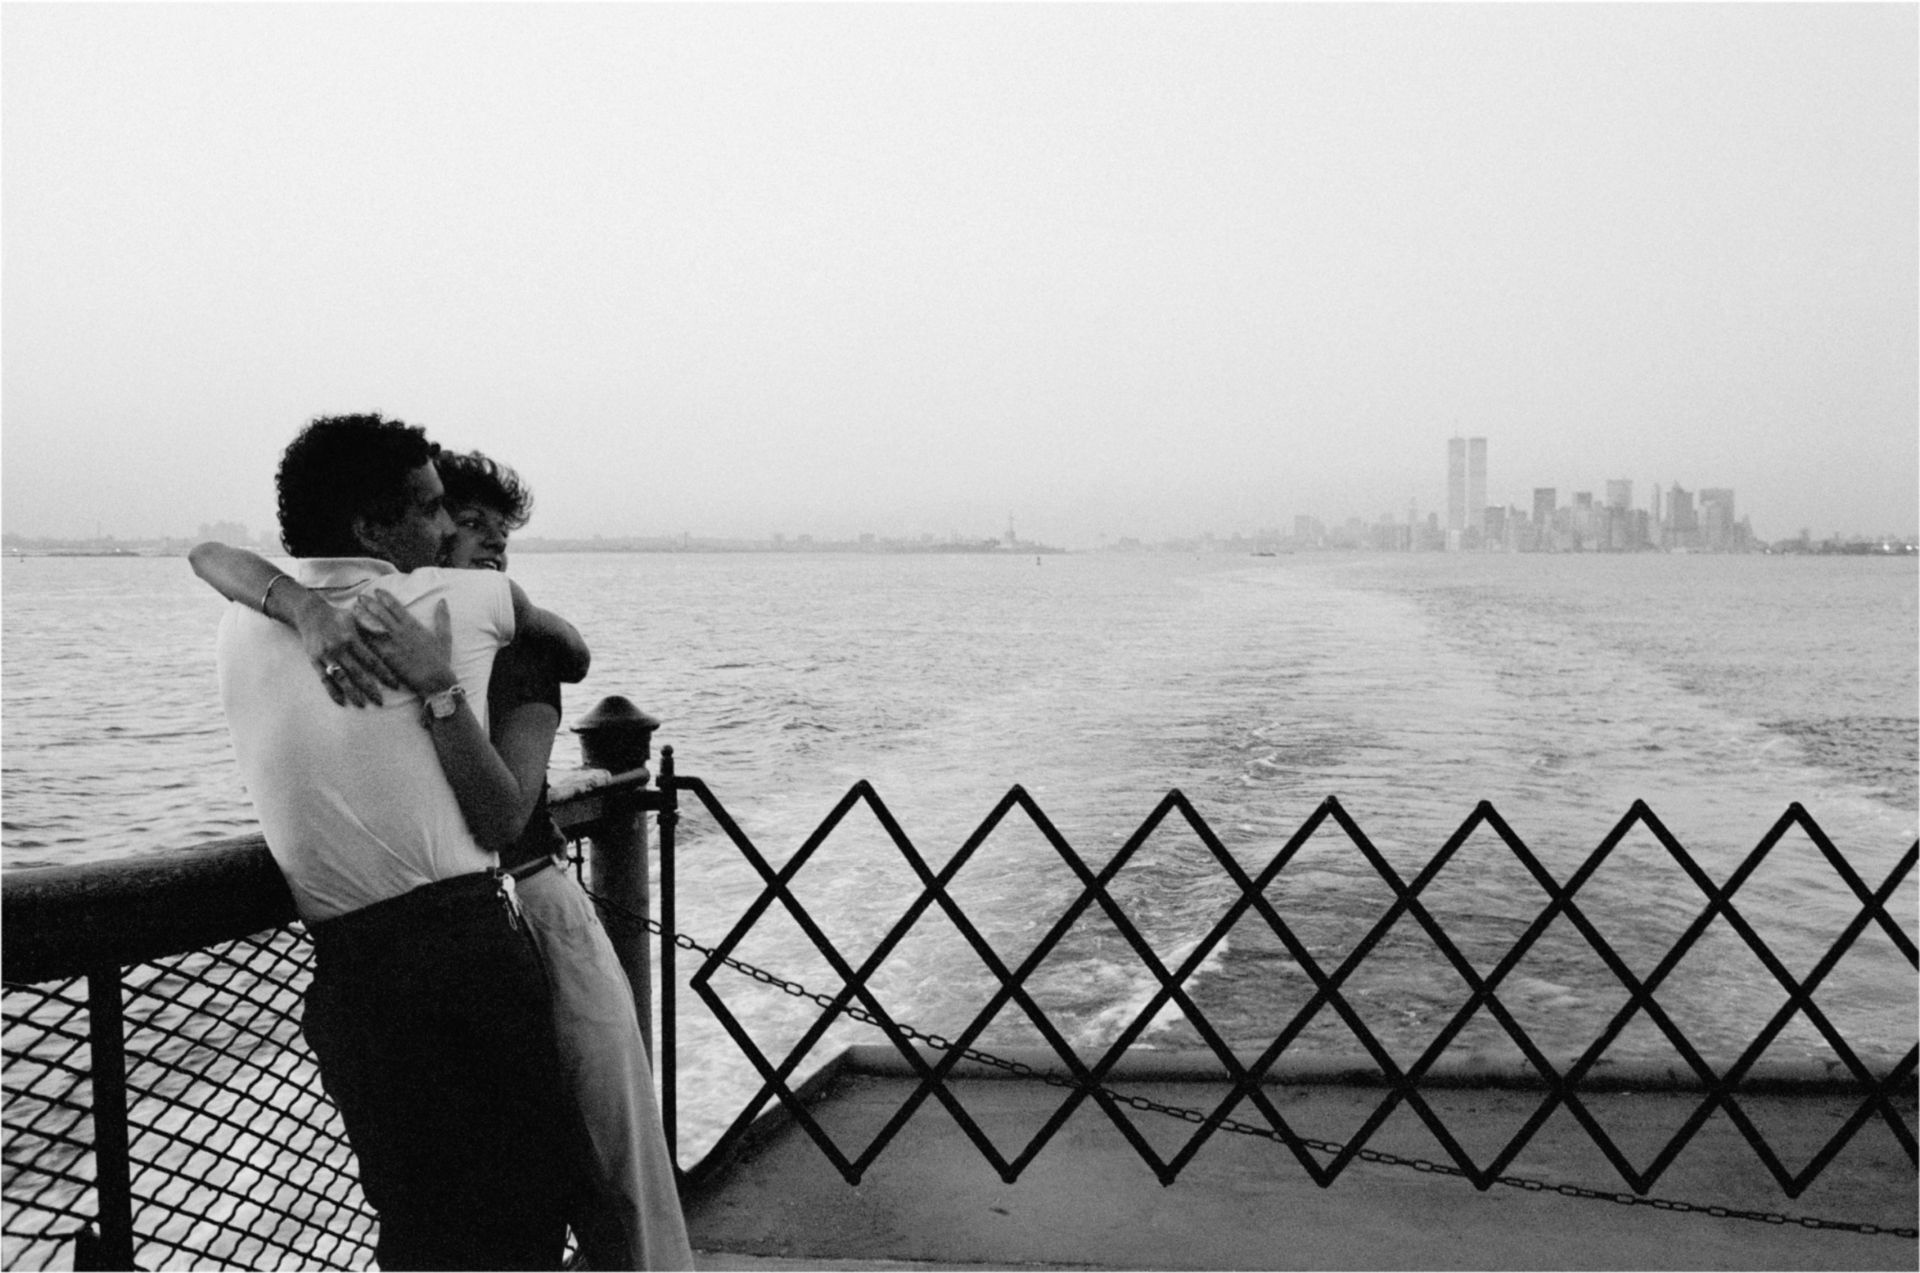 Raymond Depardon "Ferry to Staten Island, New York, 1981" Photo Print